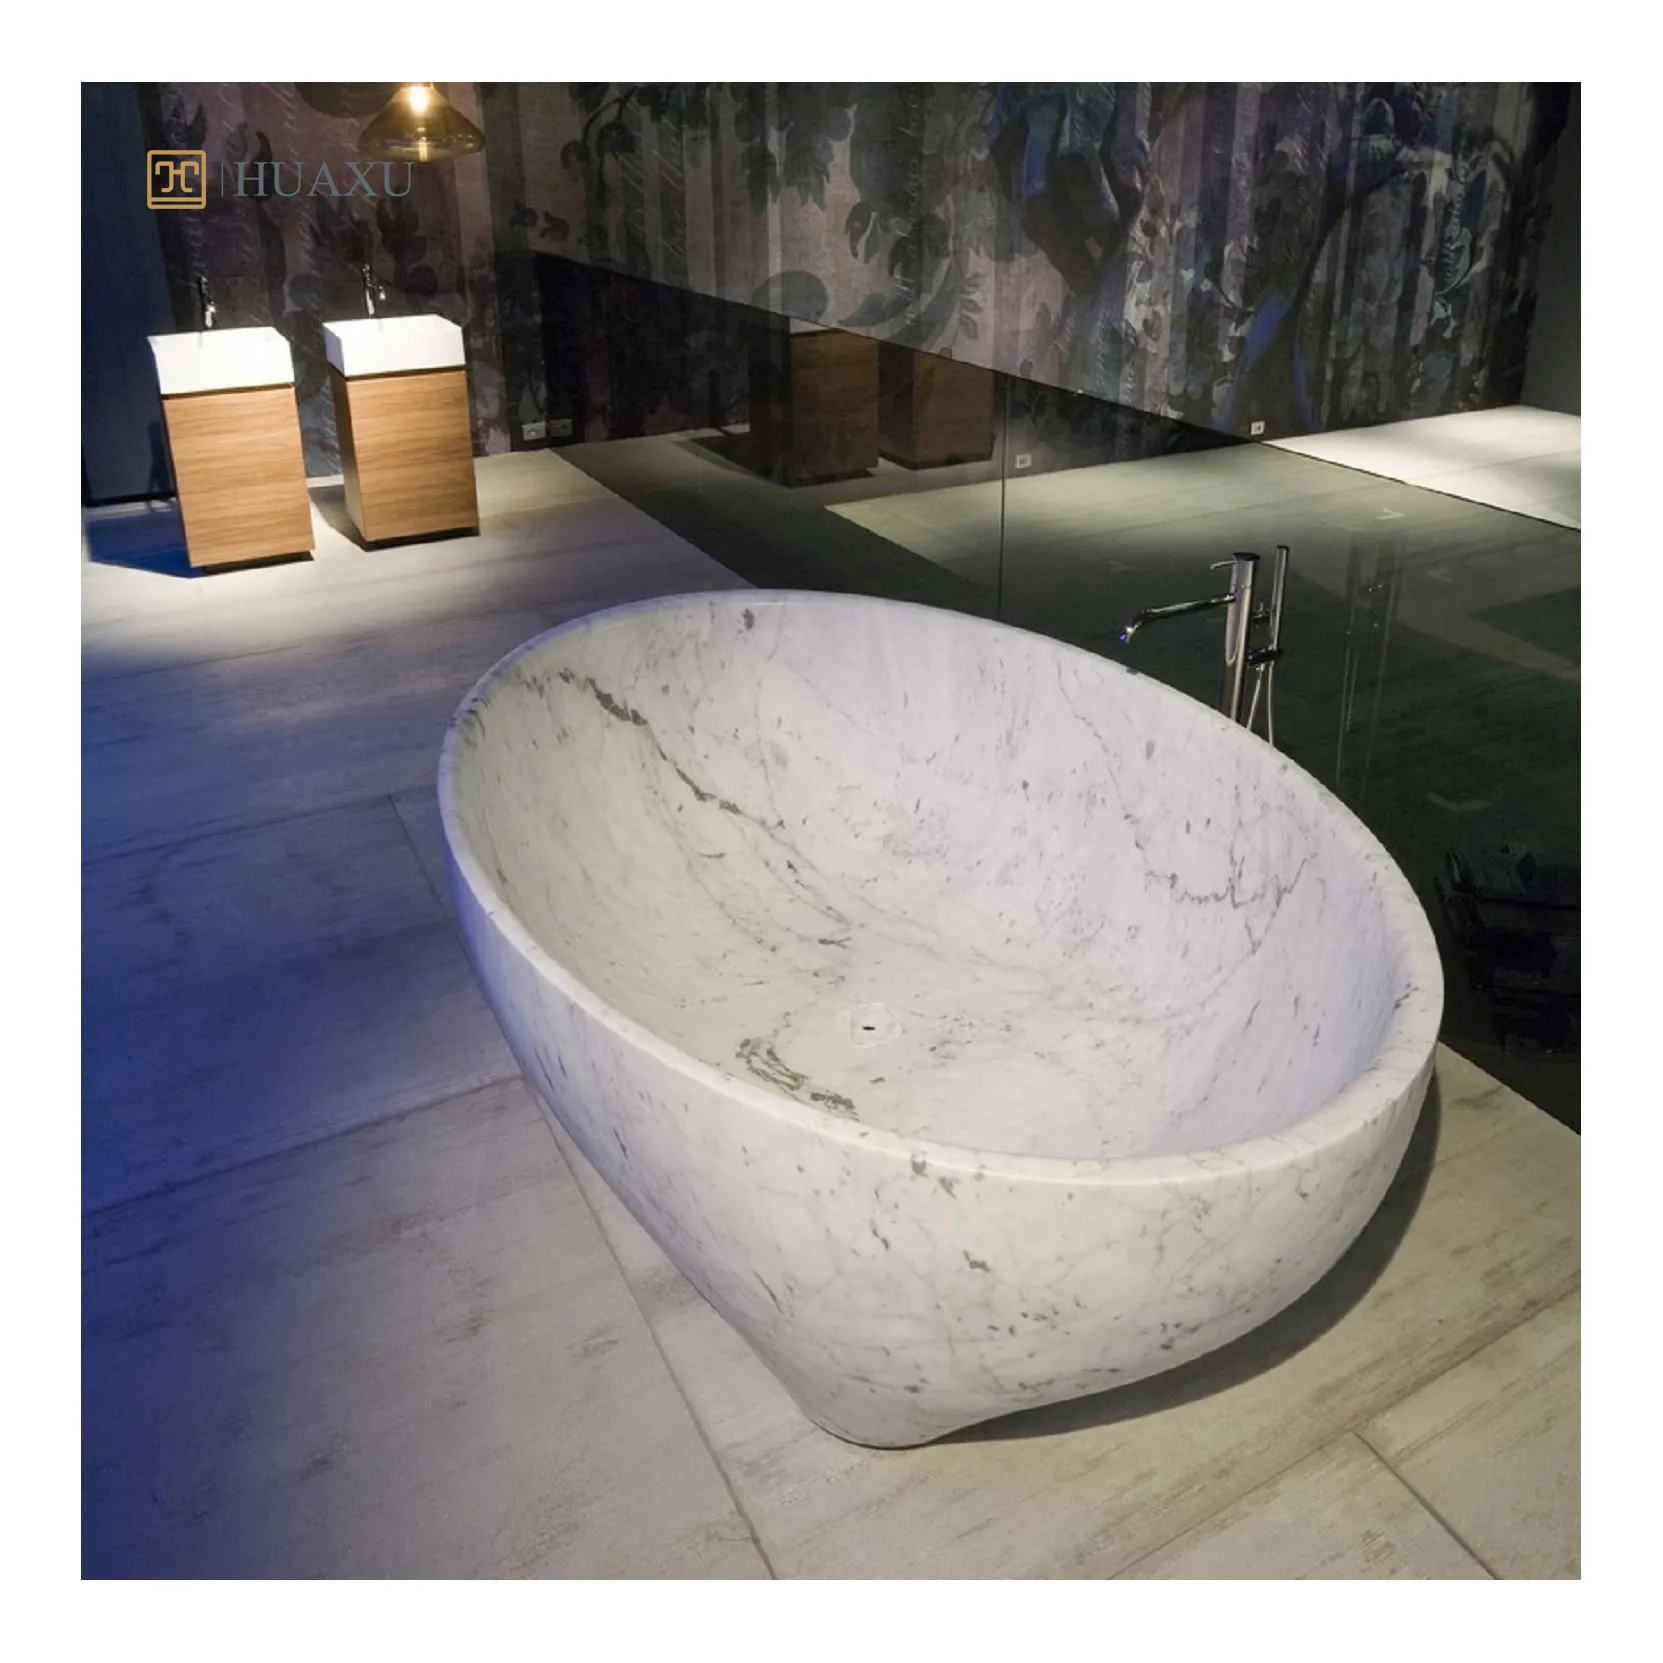 Huaxu lüks özel şekil yuvarlak Oval el Craved İtalya doğal taş ücretsiz ayakta Carrara beyaz mermer küvet